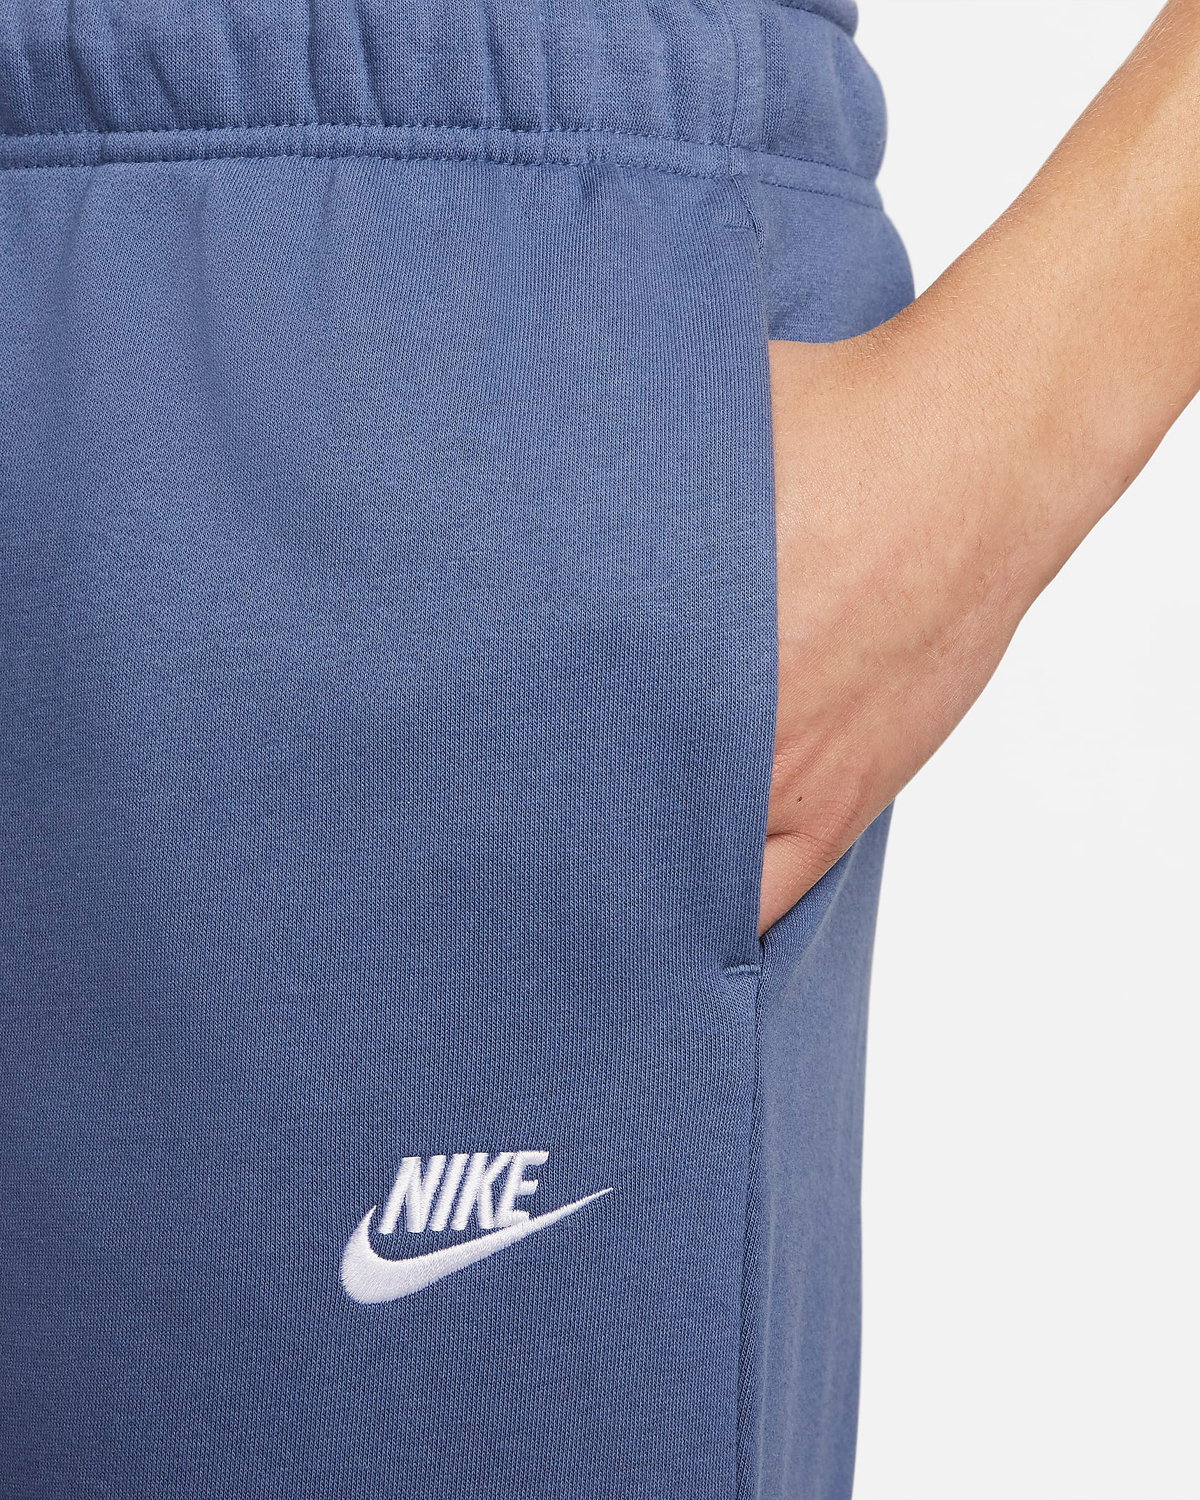 Nike-Club-Fleece-Jogger-Pants-Diffused-Blue-2